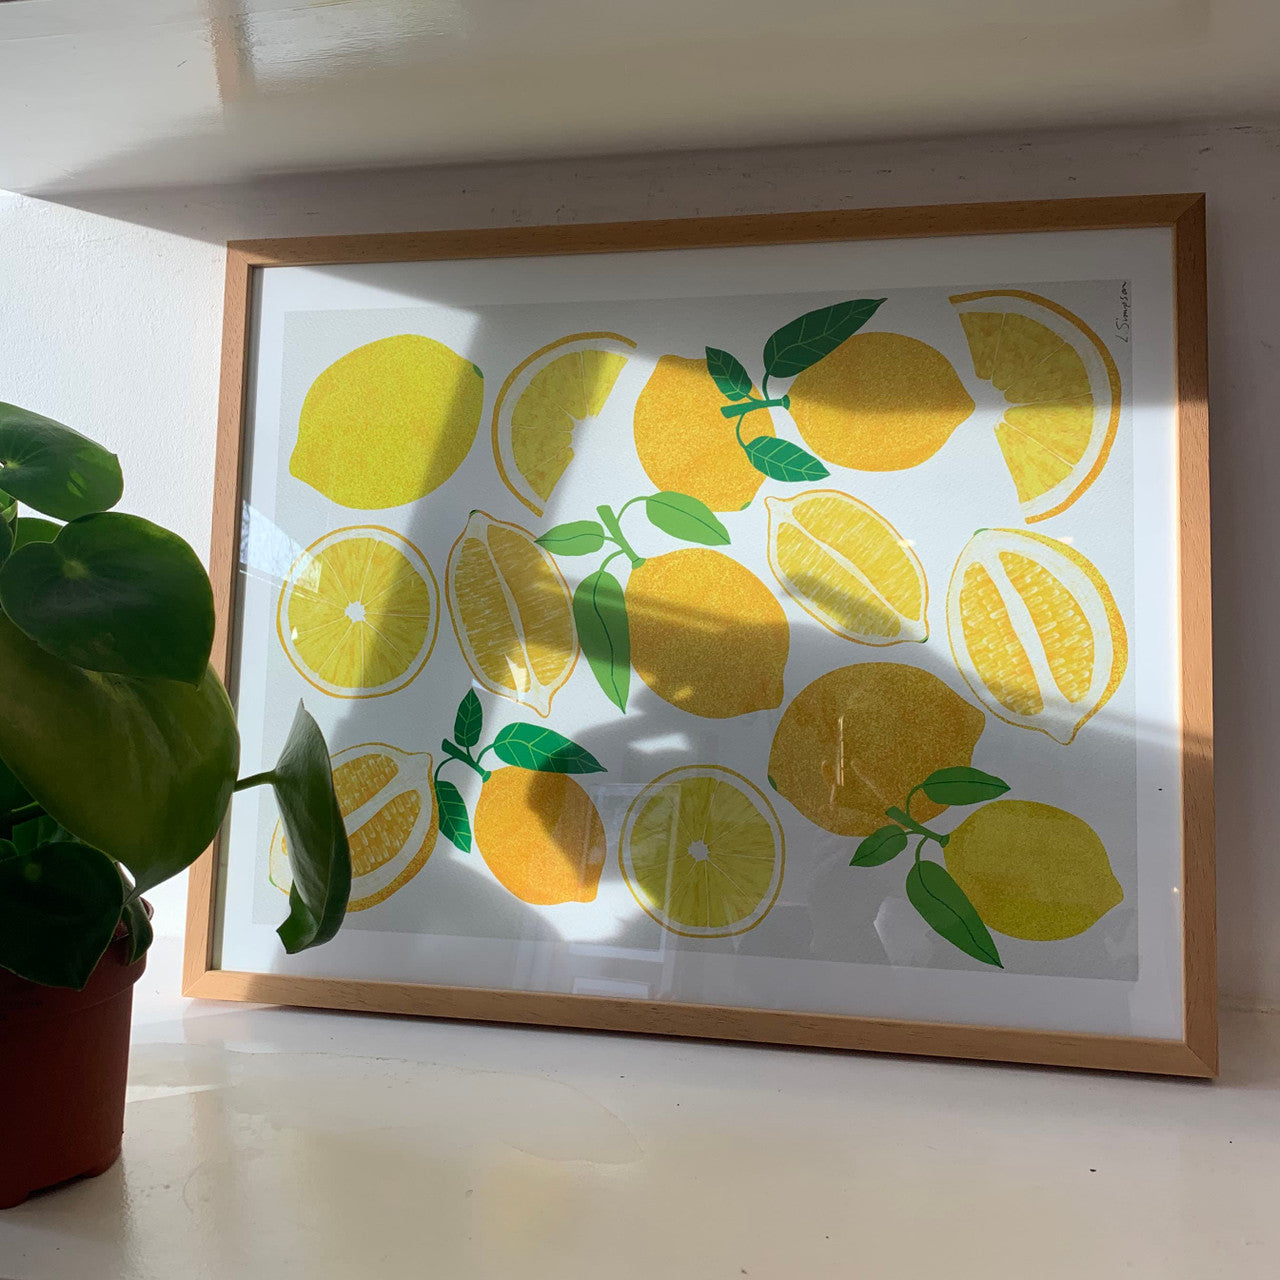 Lemon Harvest Print